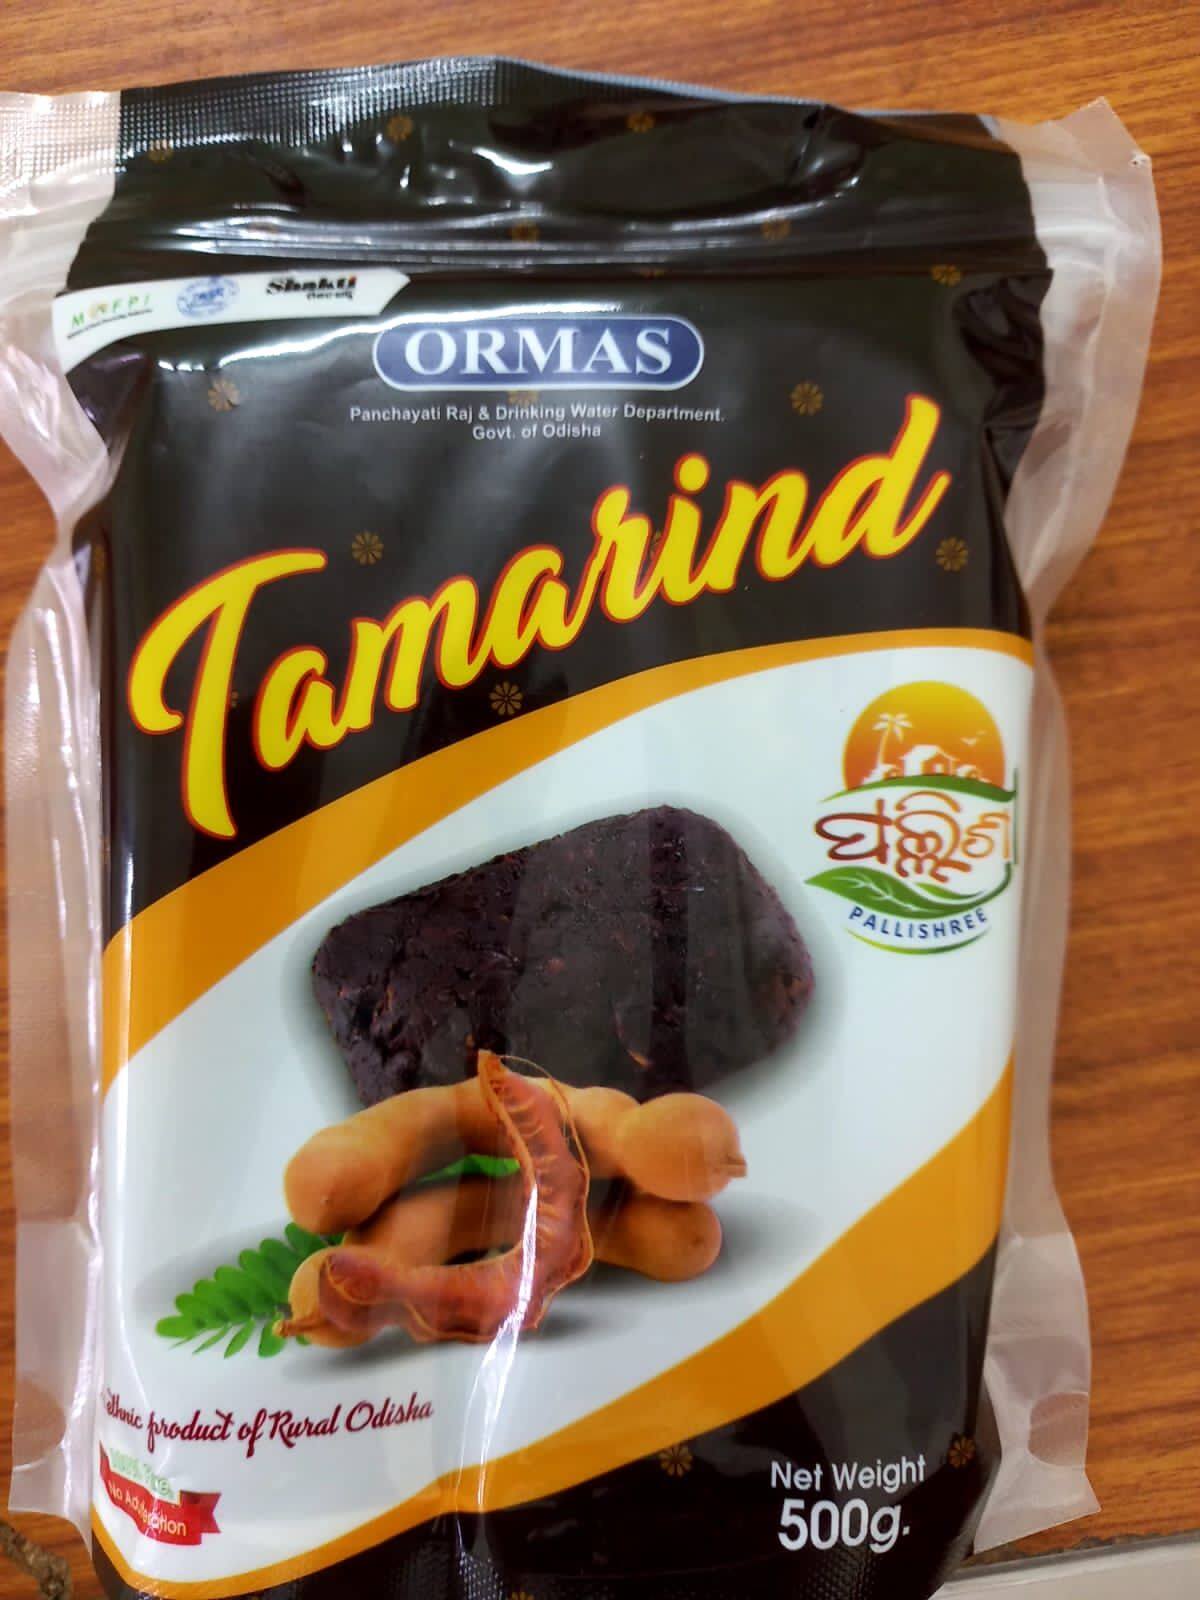 Shree Tamarind Cake - Premium, 1kg Pack : Amazon.in: Grocery & Gourmet Foods